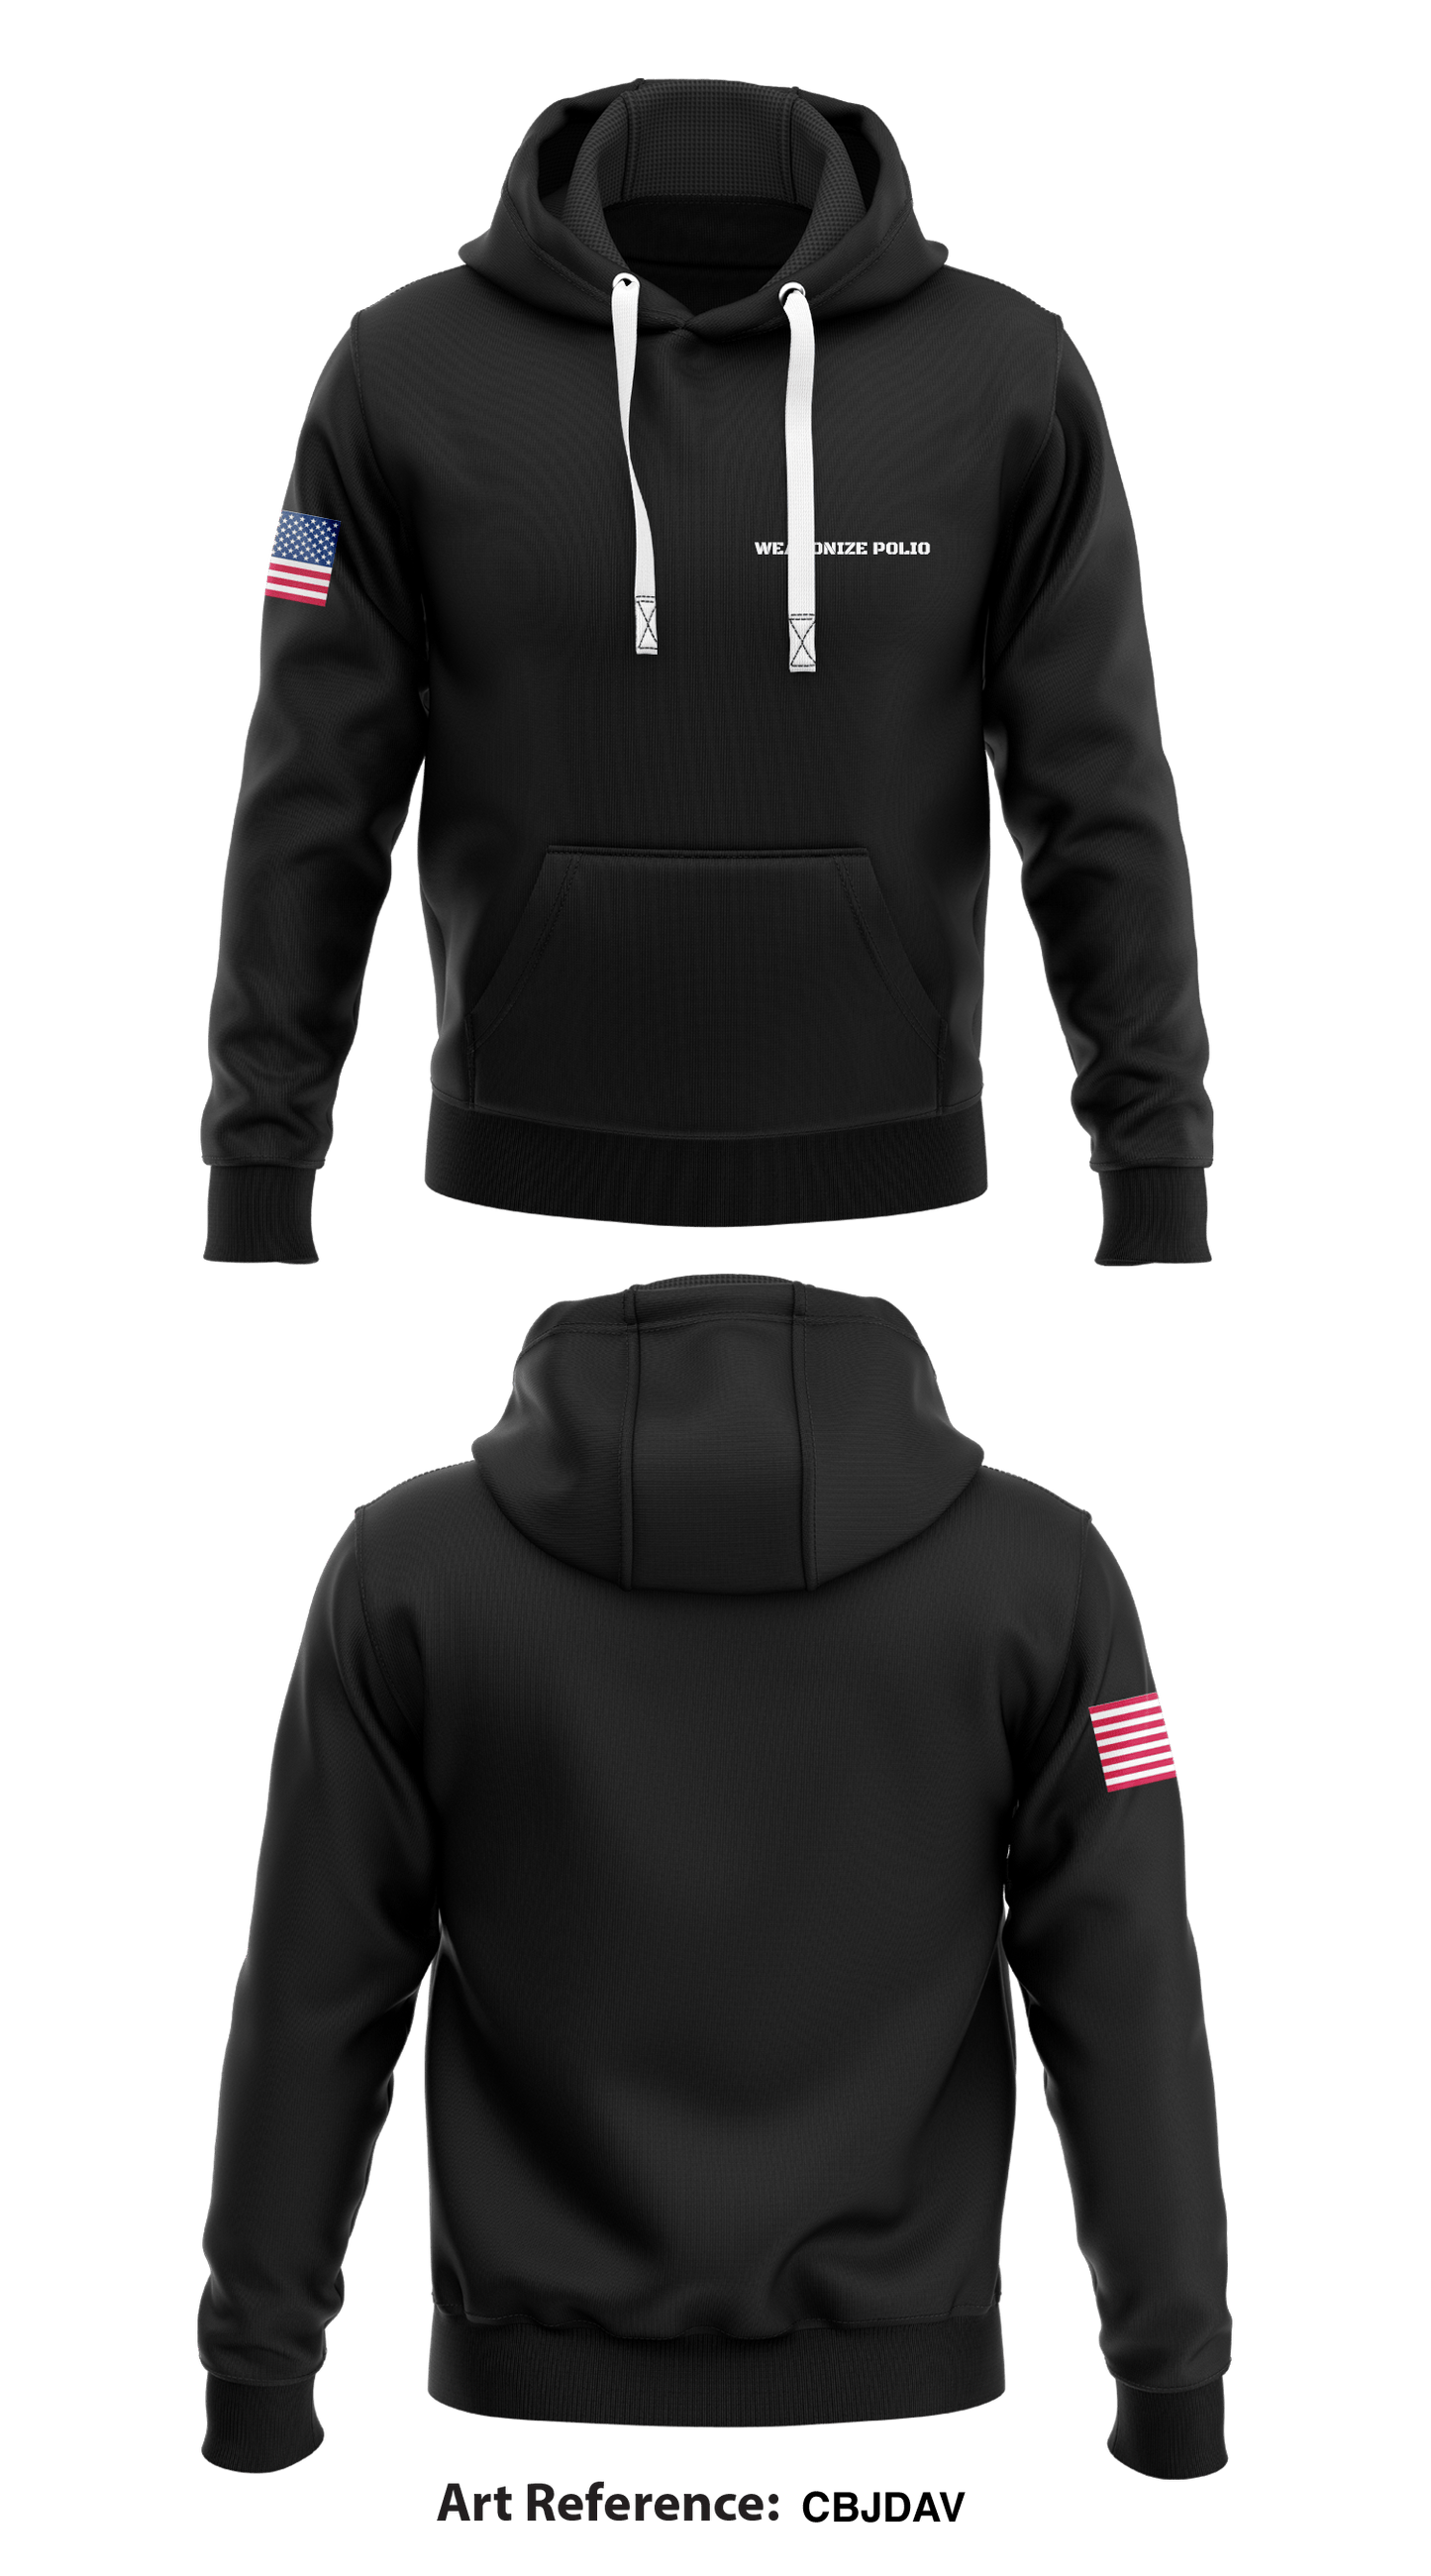 Weaponize Polio Store 1  Core Men's Hooded Performance Sweatshirt - cBJdaV